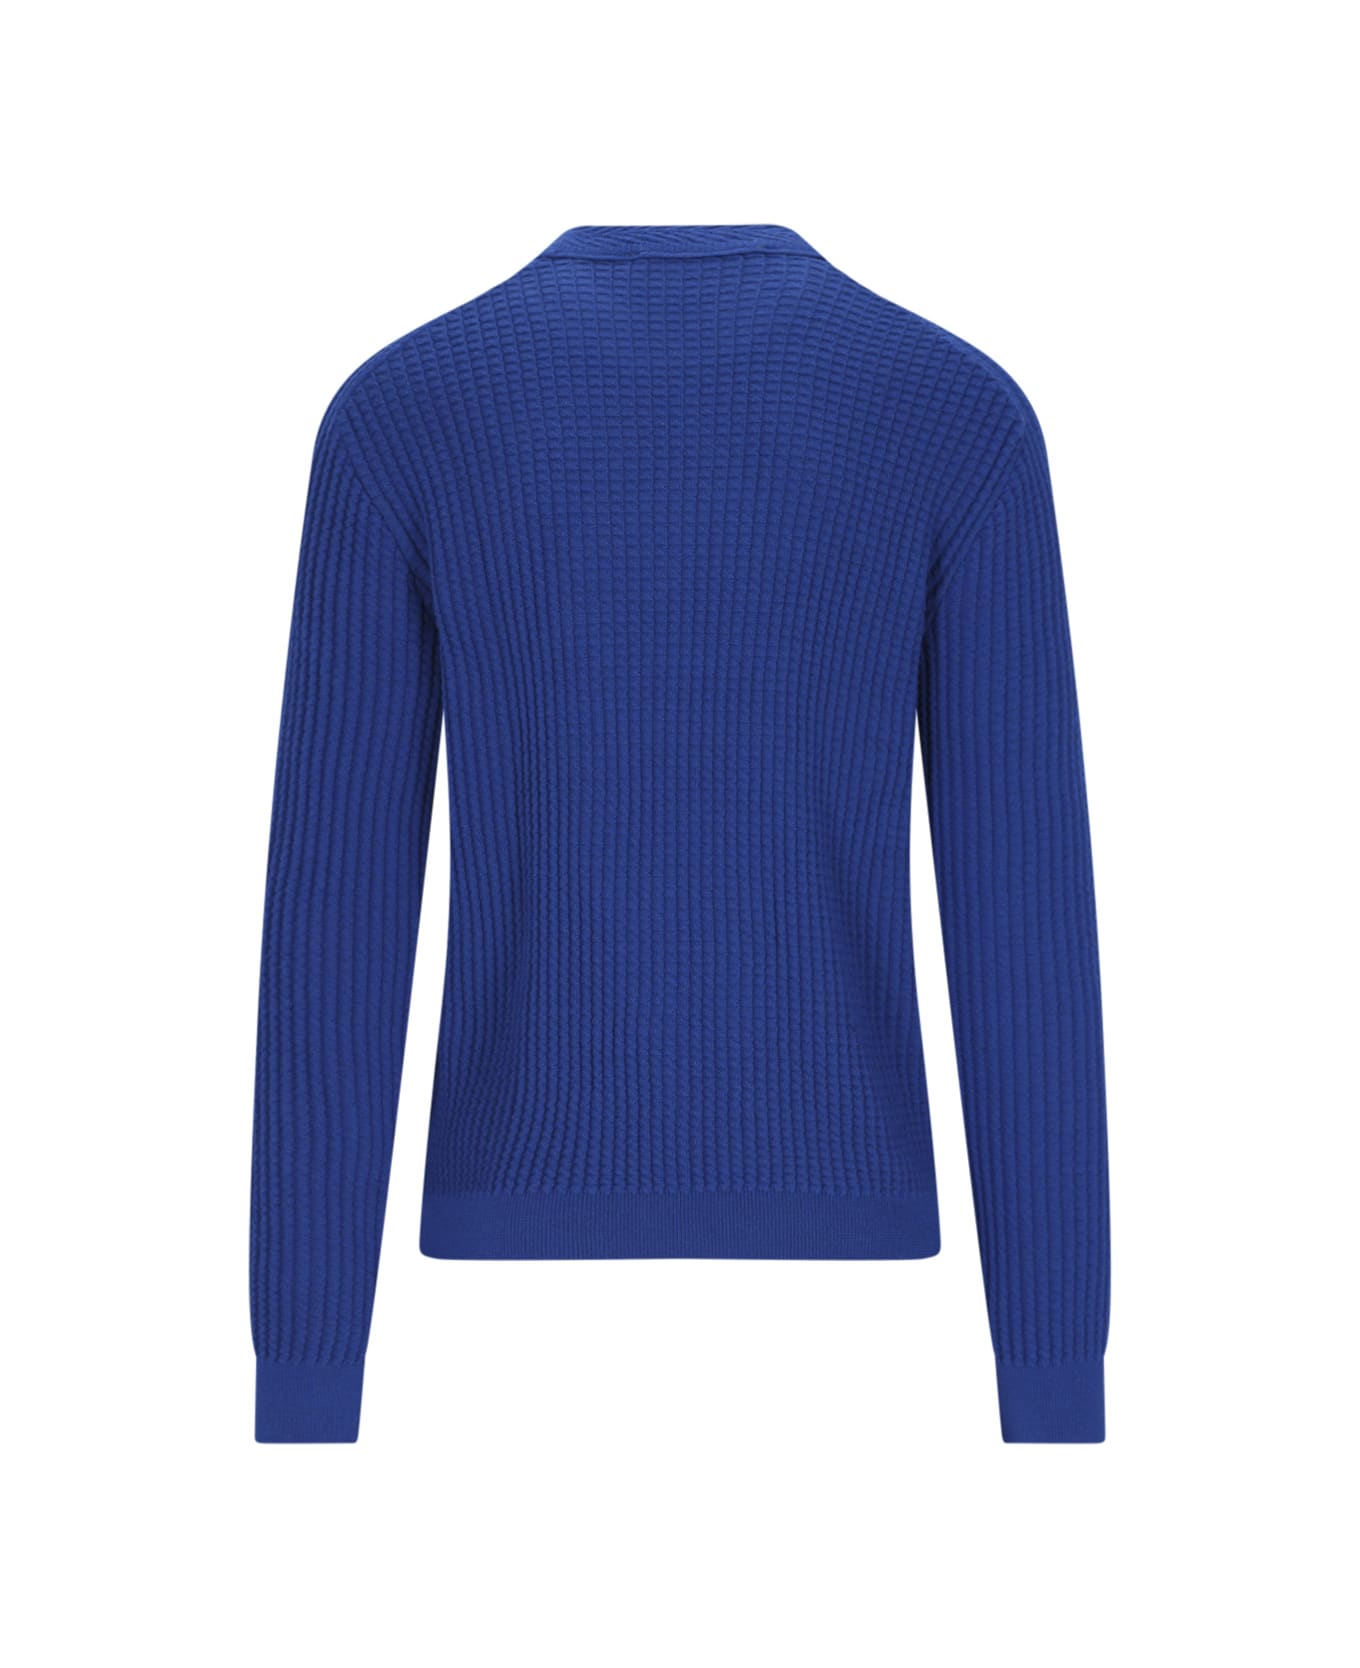 Kiko Kostadinov Sweater - Light blue